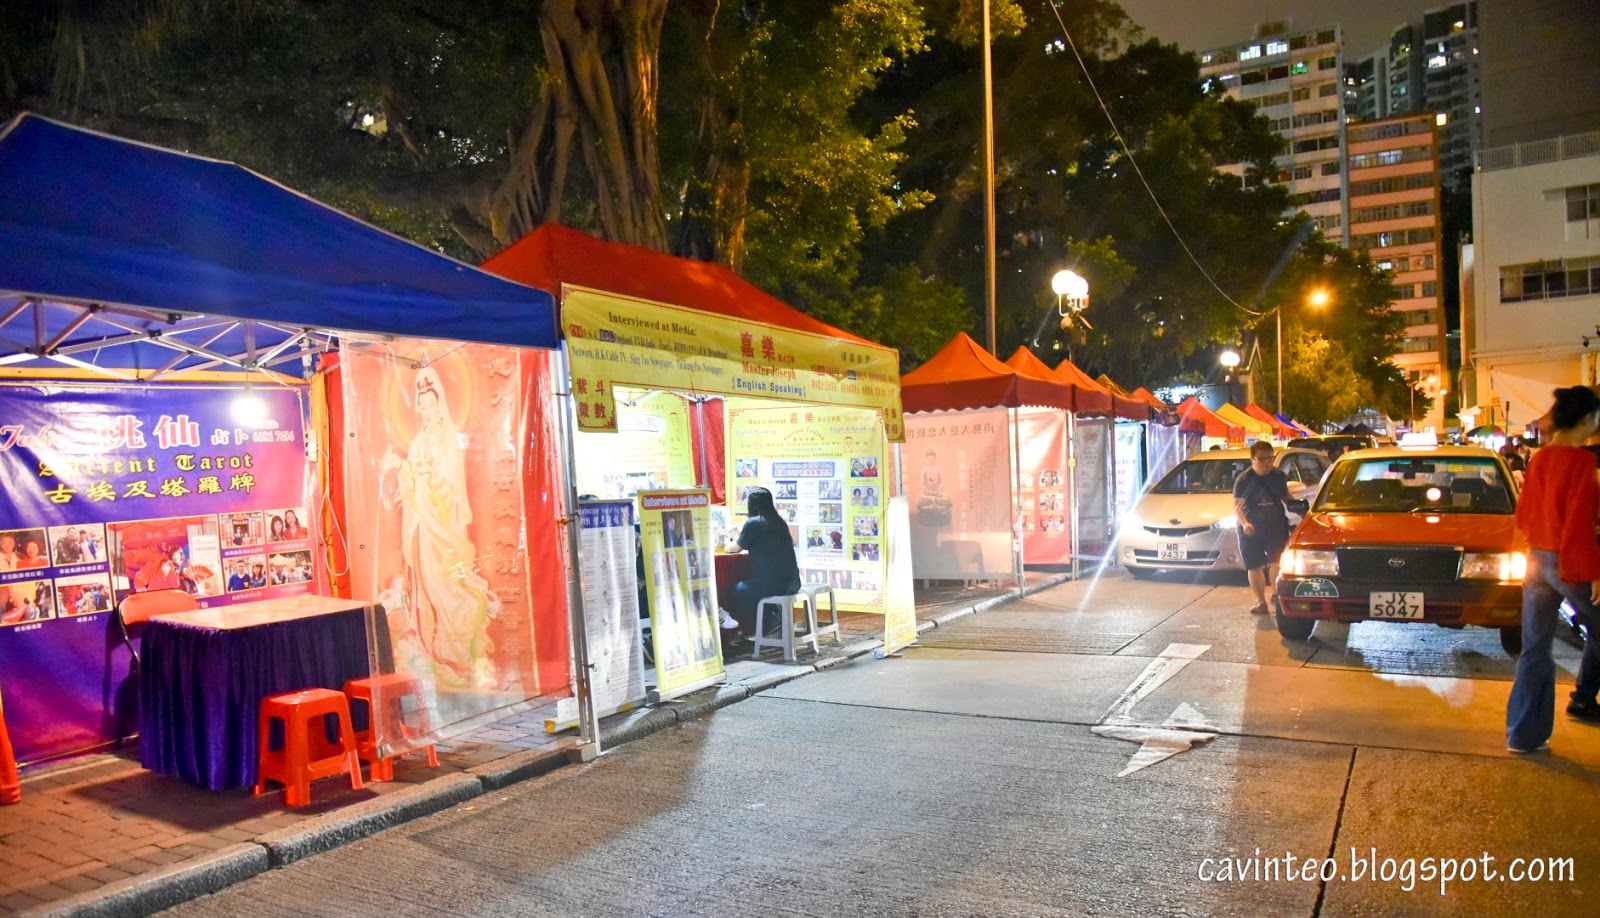 Entree Kibbles: The Fortune Telling Street Near Yau Ma Tei Tin Hau Temple in Hong Kong # ...